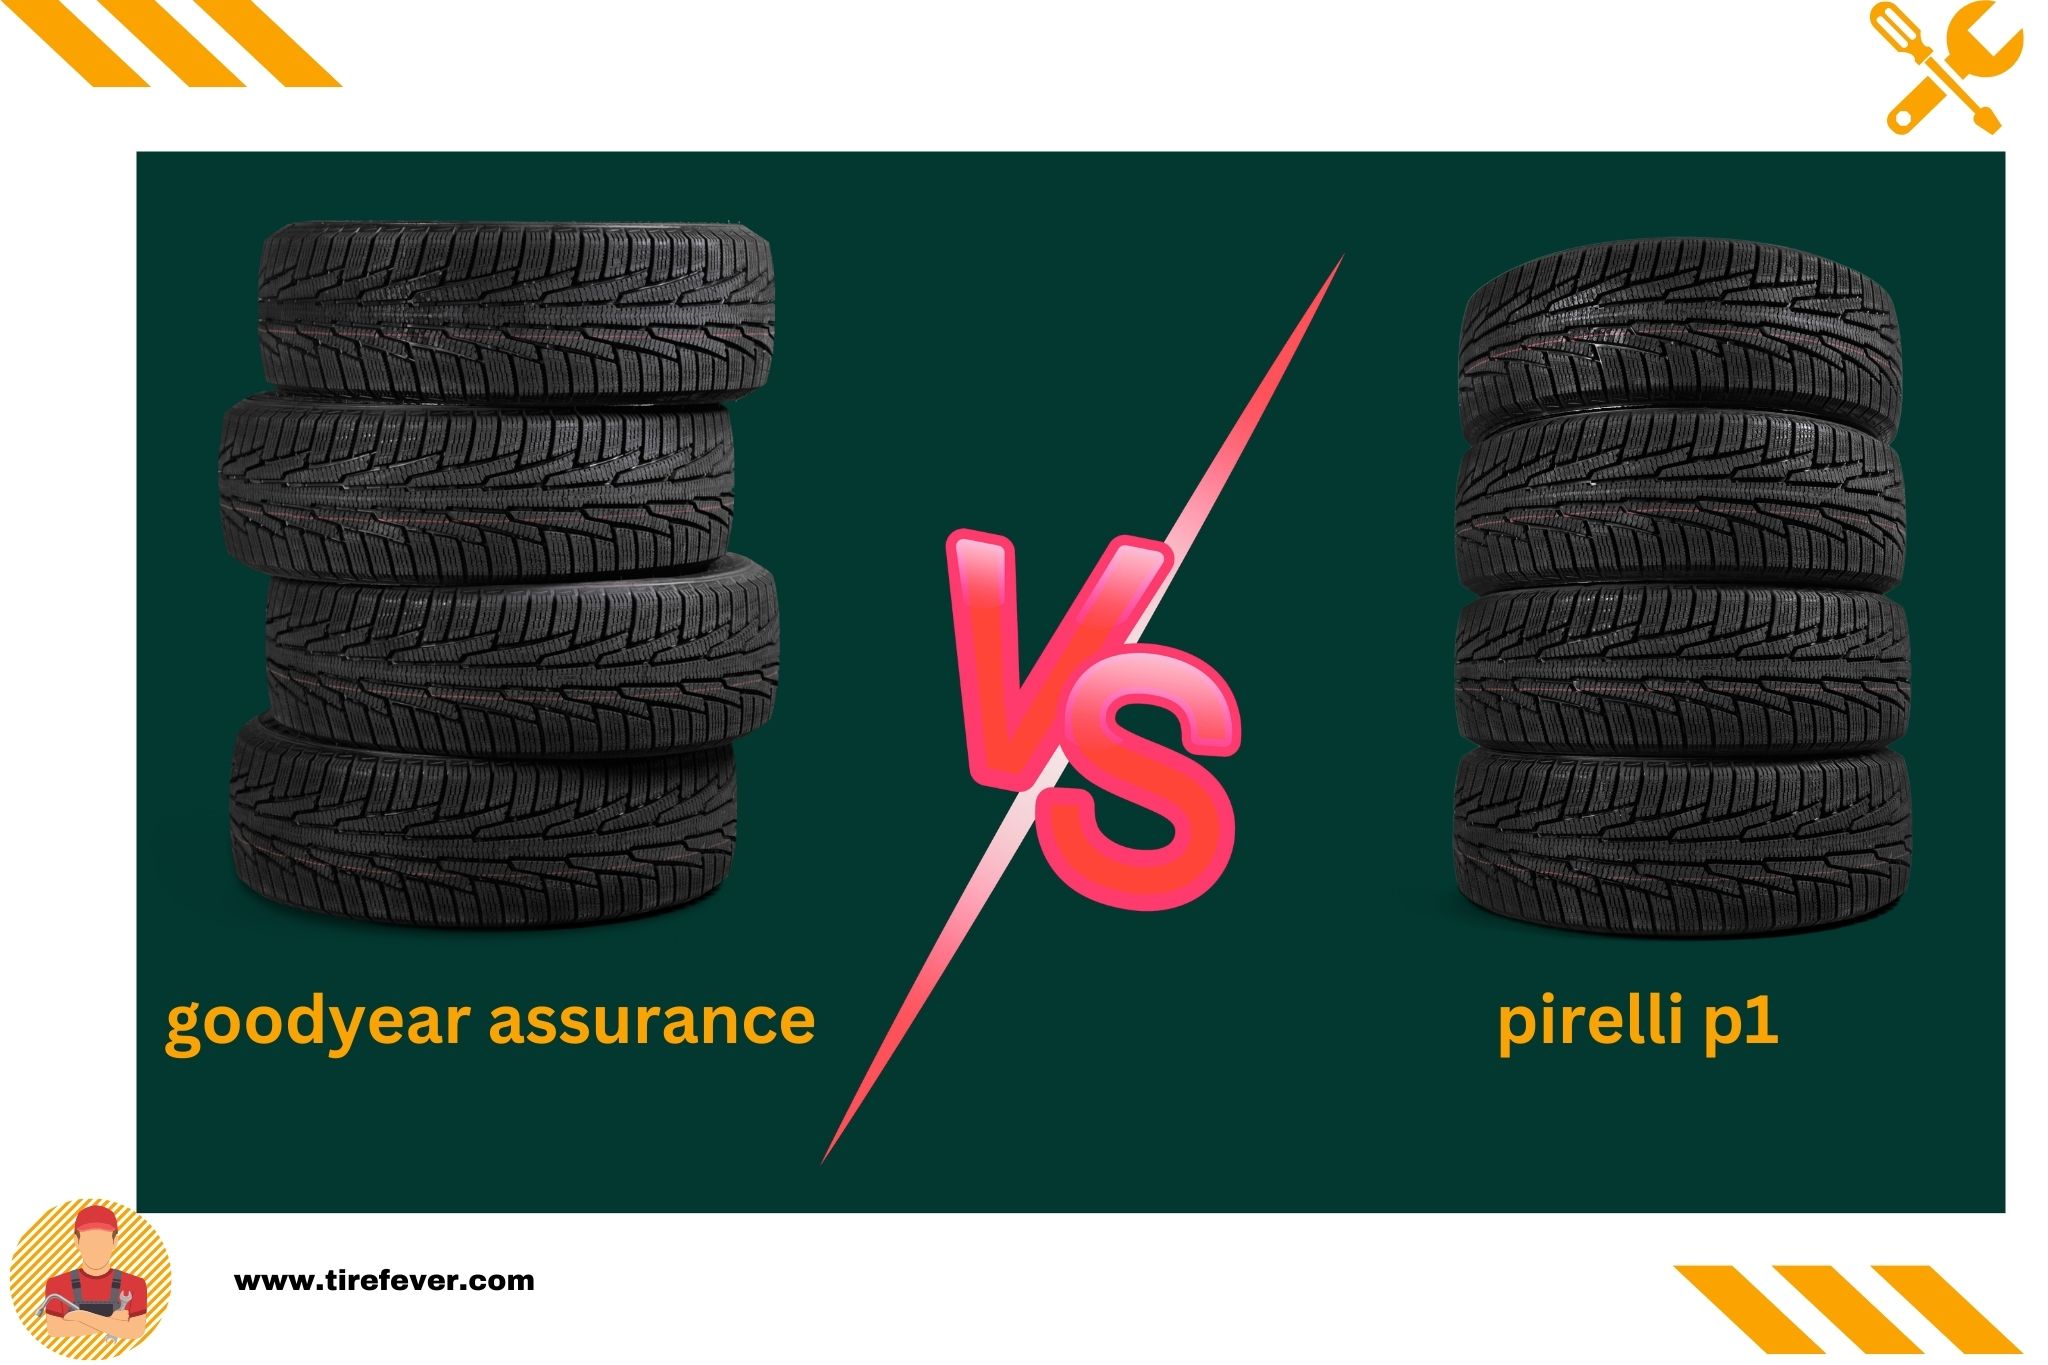 goodyear assurance vs pirelli p1